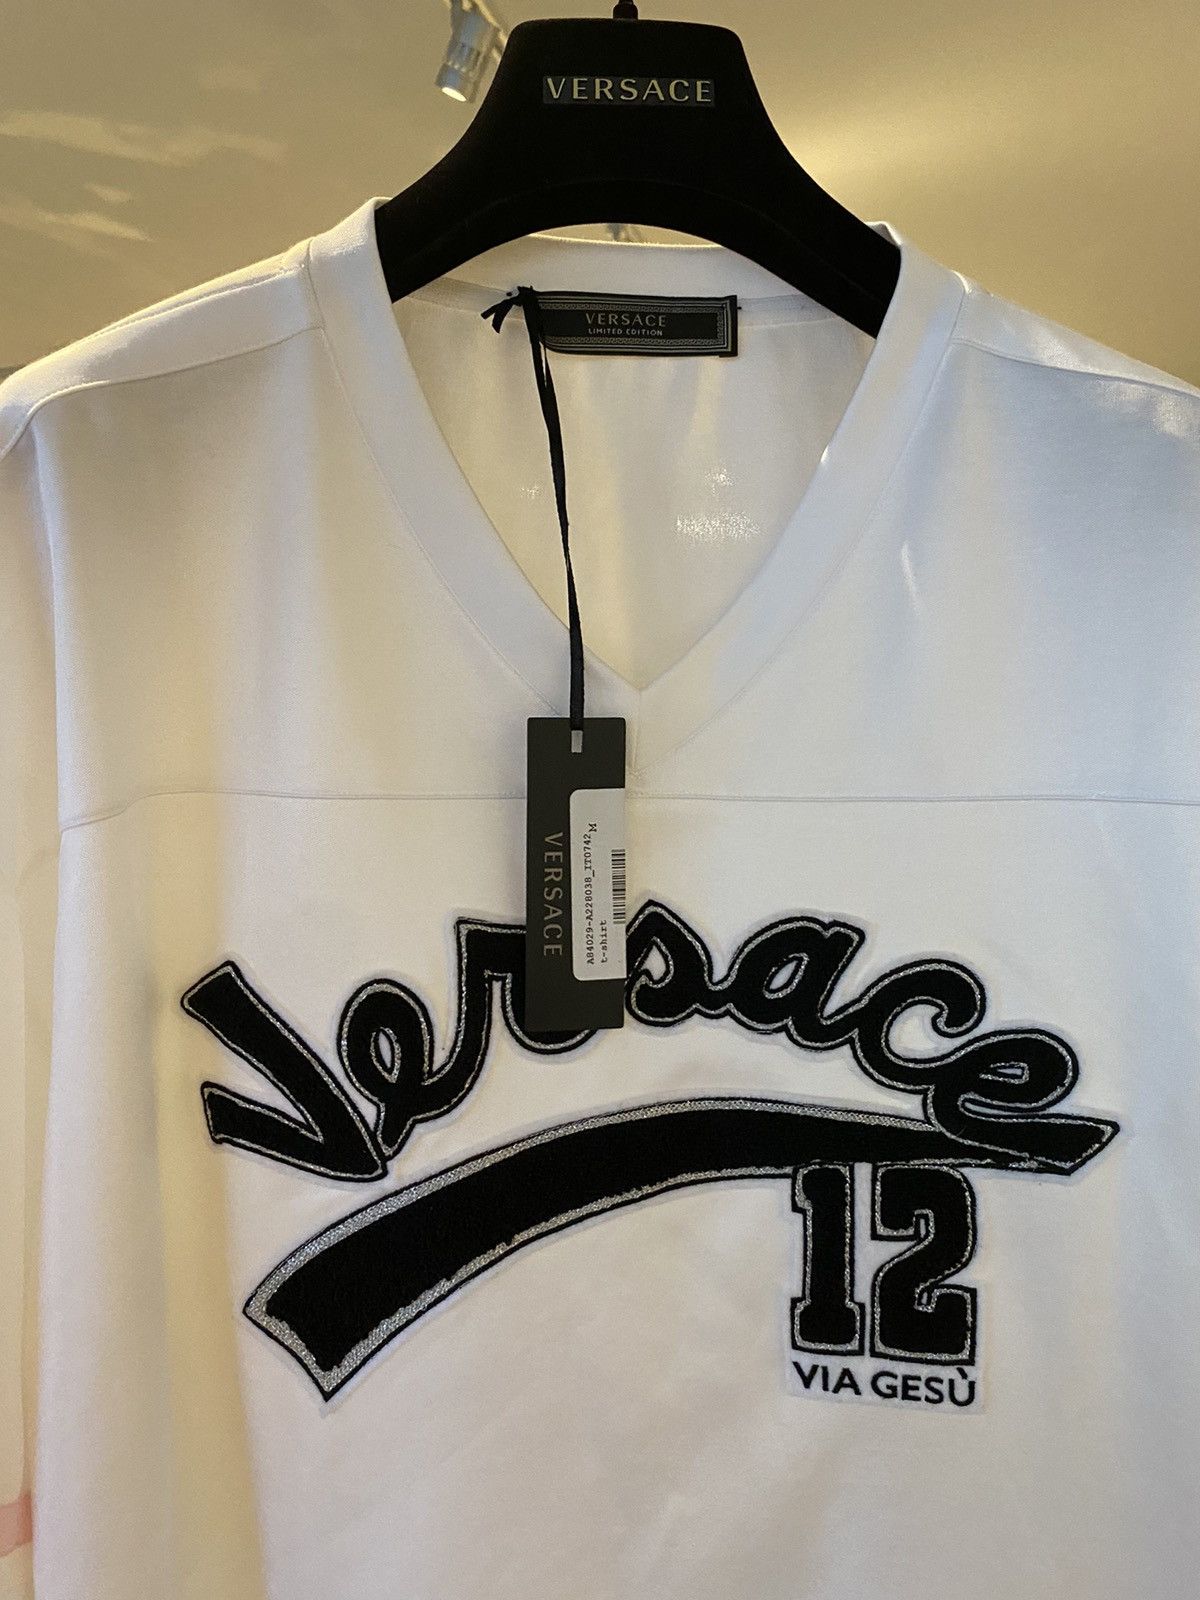 Versace Limited Edition Via Gesu Runway Jersey T-shirt $1,050 New Size US L / EU 52-54 / 3 - 2 Preview